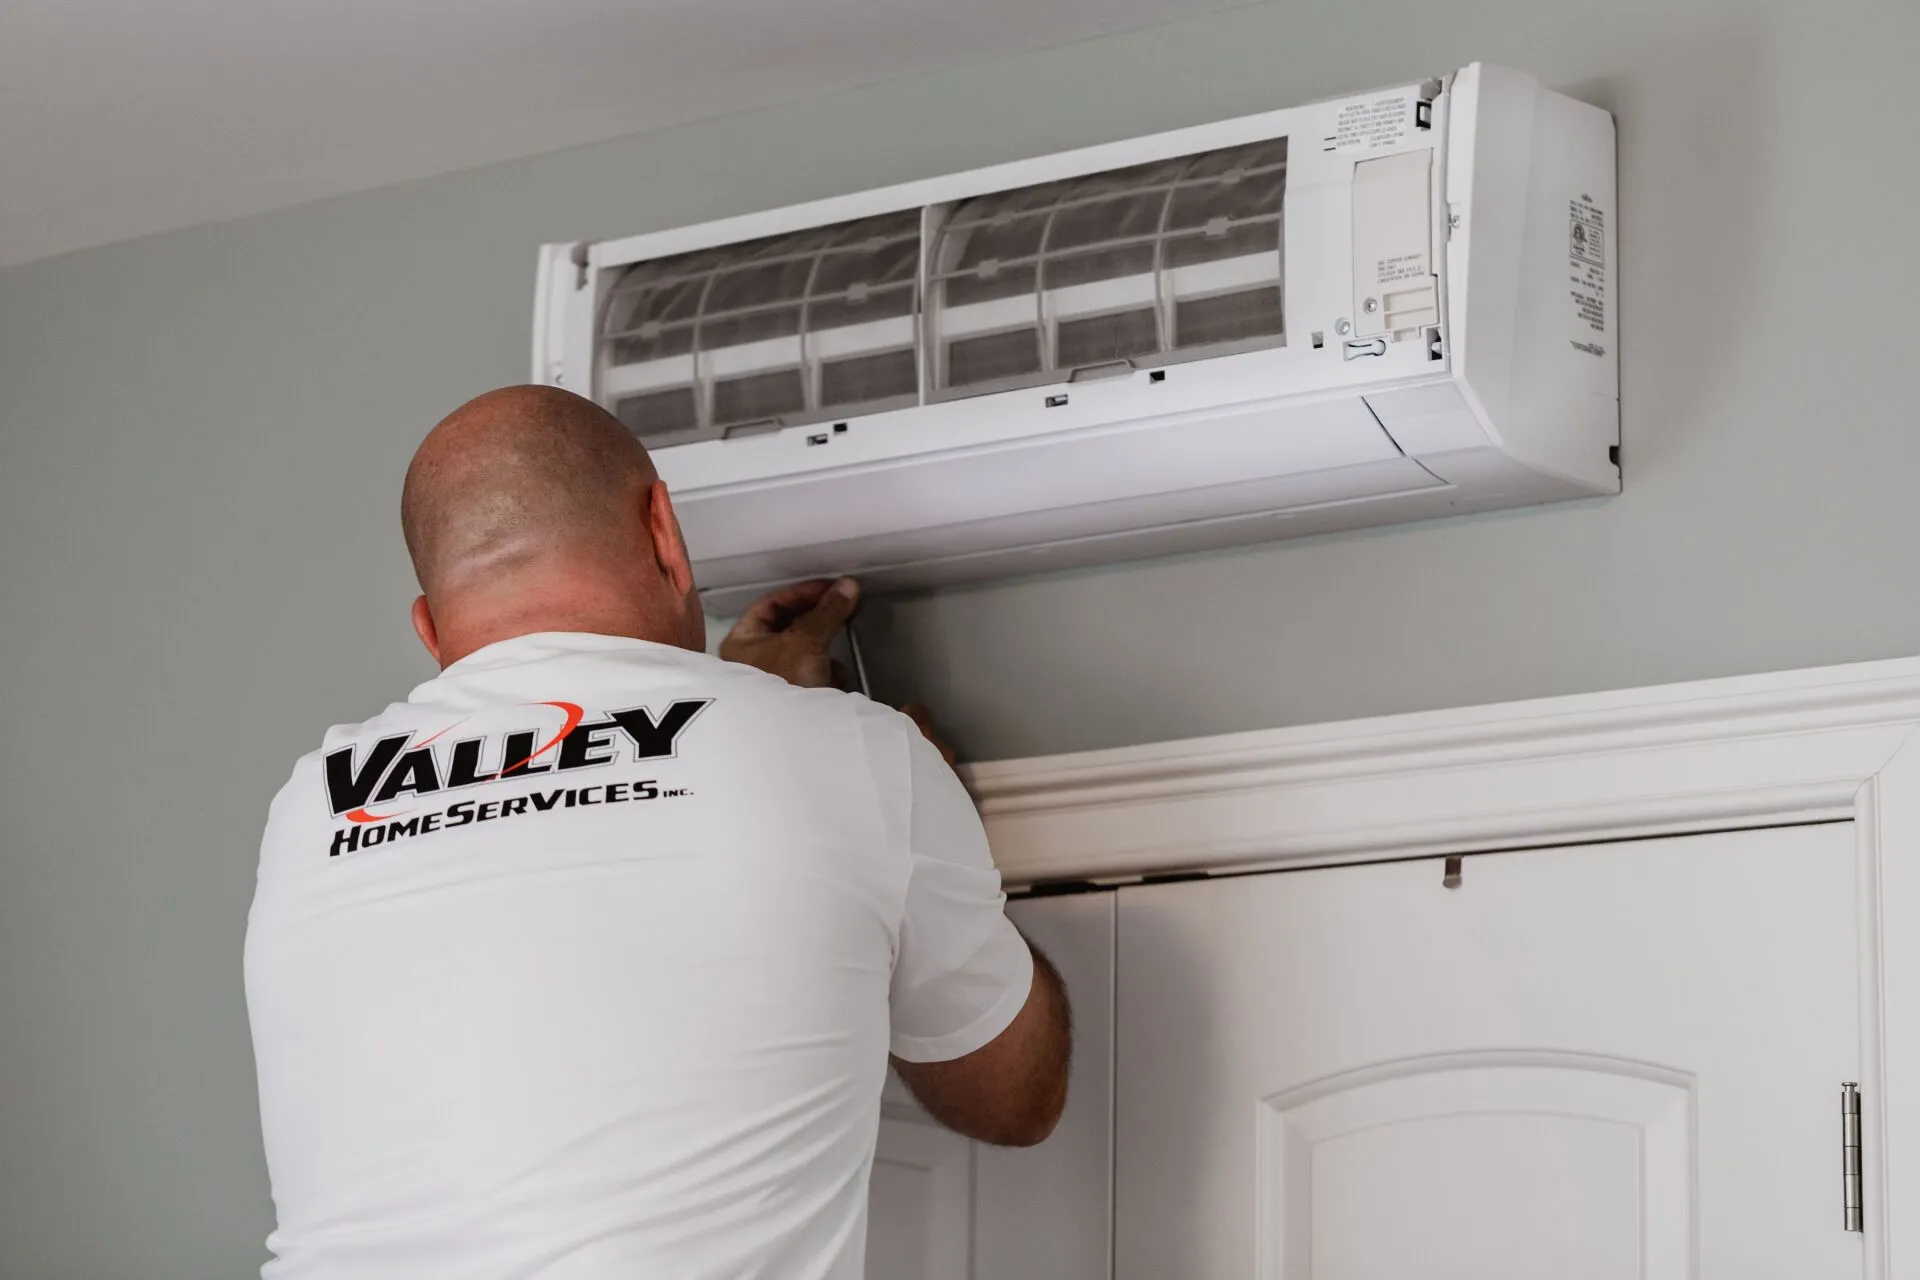 Valley Home Services technician installing a heat pump.